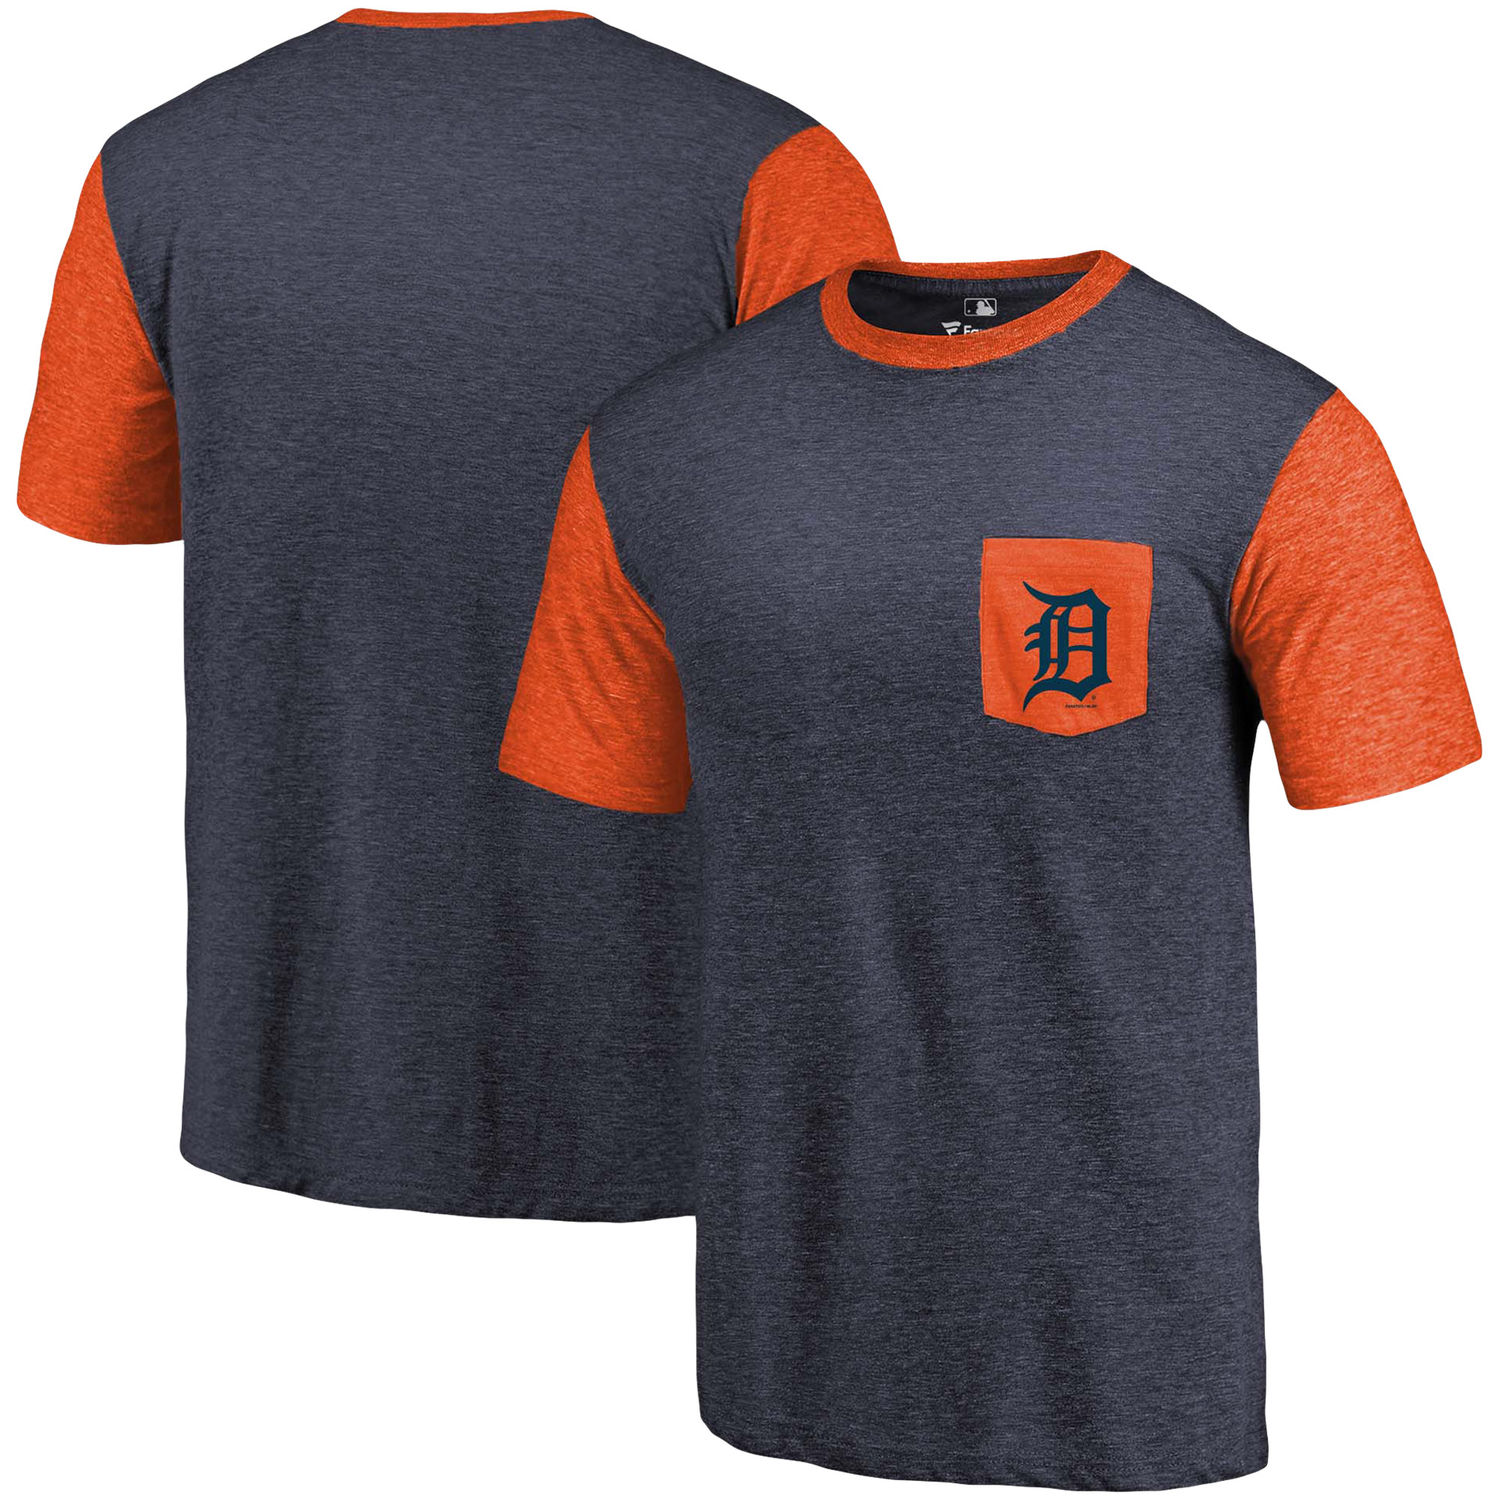 Men's Detroit Tigers Fanatics Branded Navy-Orange Refresh Pocket T-Shirt